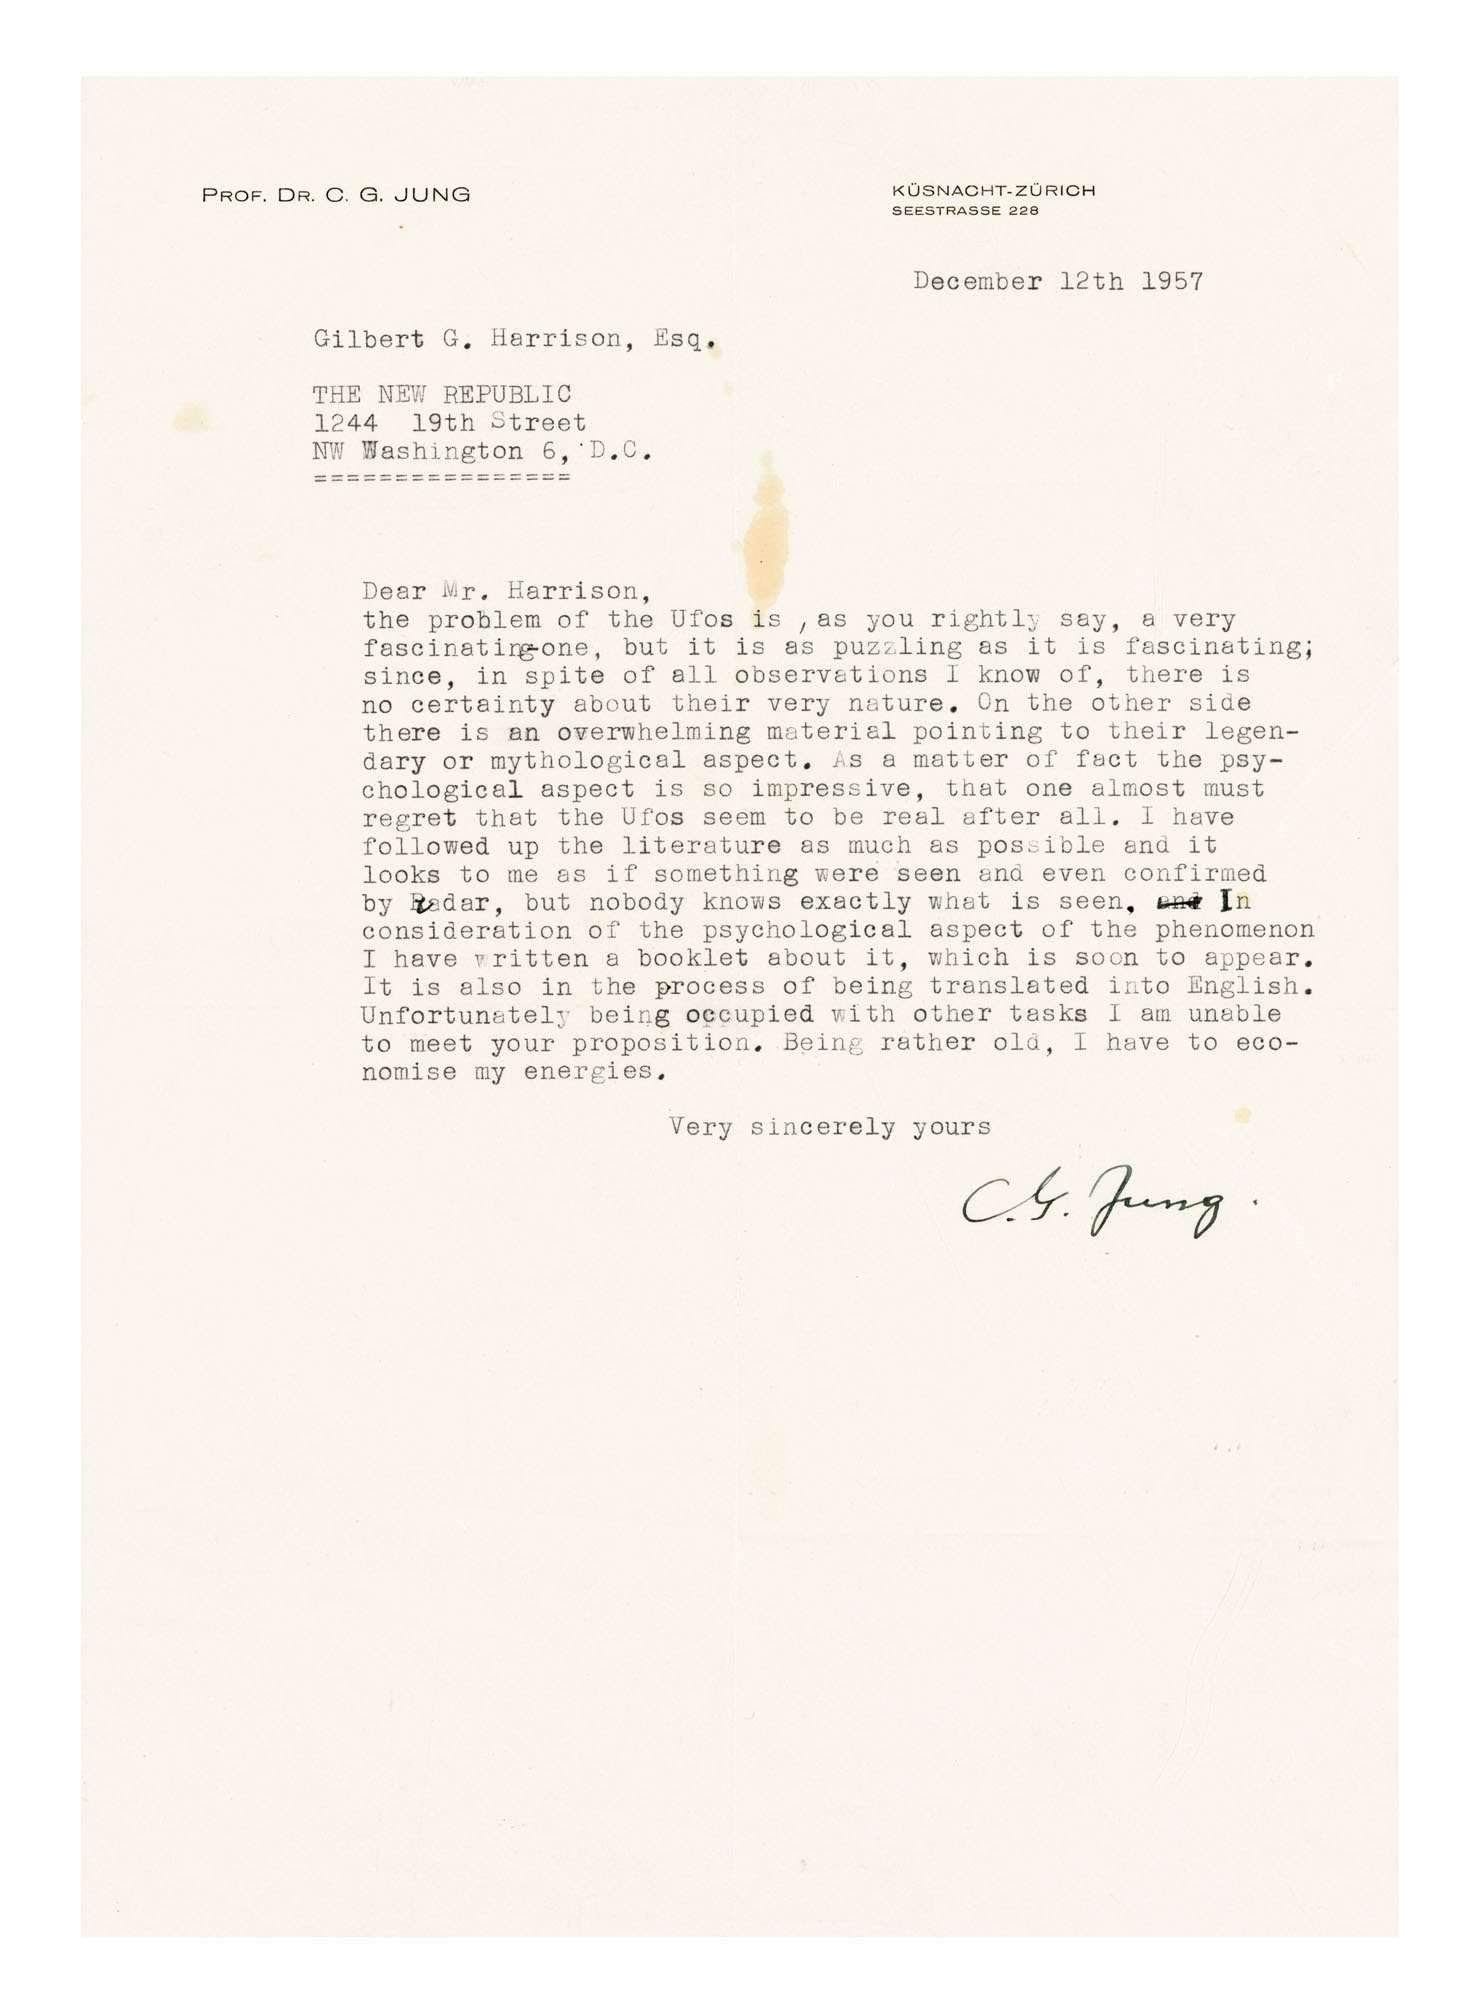 Carl Jung UFO letter